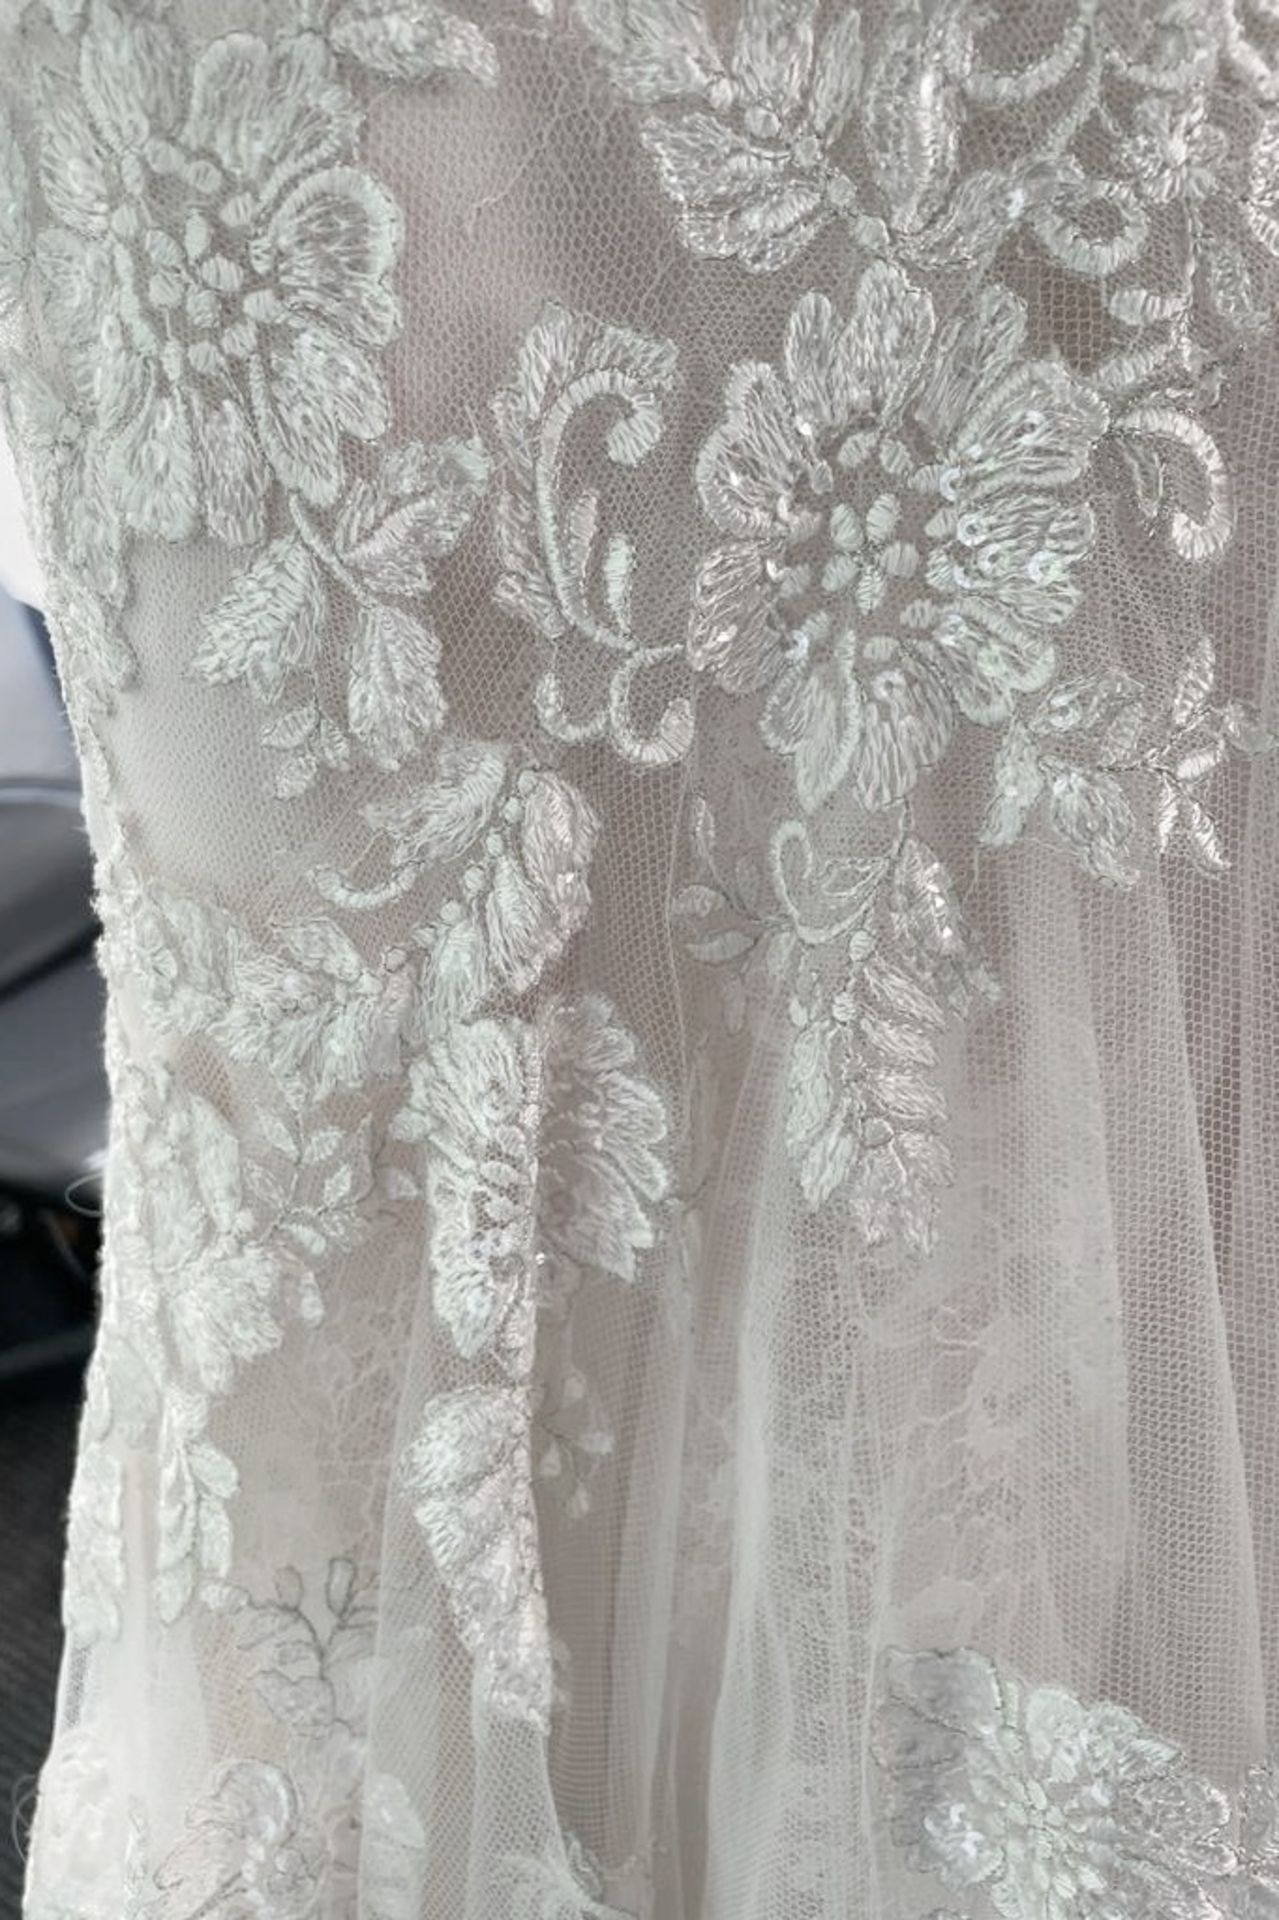 1 x DIANA LEGRANDE '7517' Designer Wedding Dress Bridal Gown - Size: UK 10 - Original RRP £1,800 - Image 8 of 18